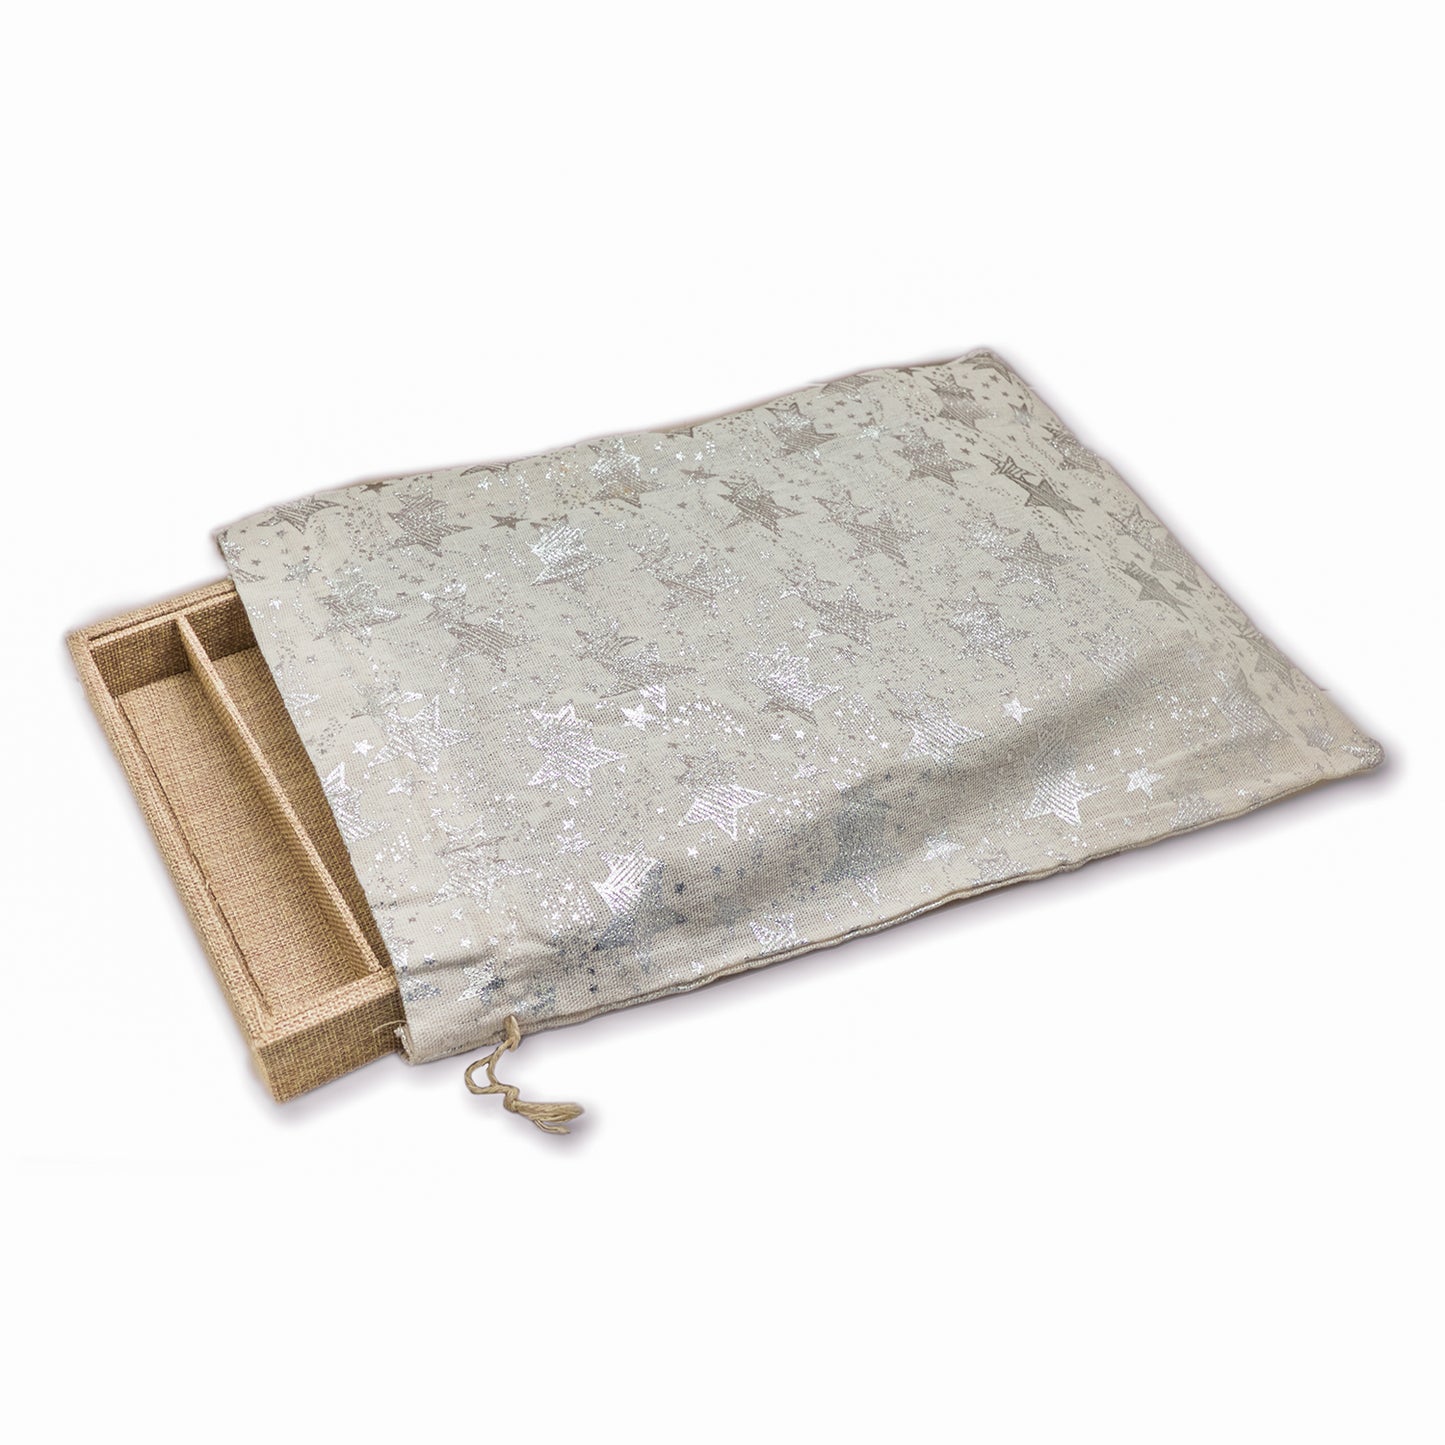 12" x 16" Cotton Muslin Silver Star Drawstring Gift Bags